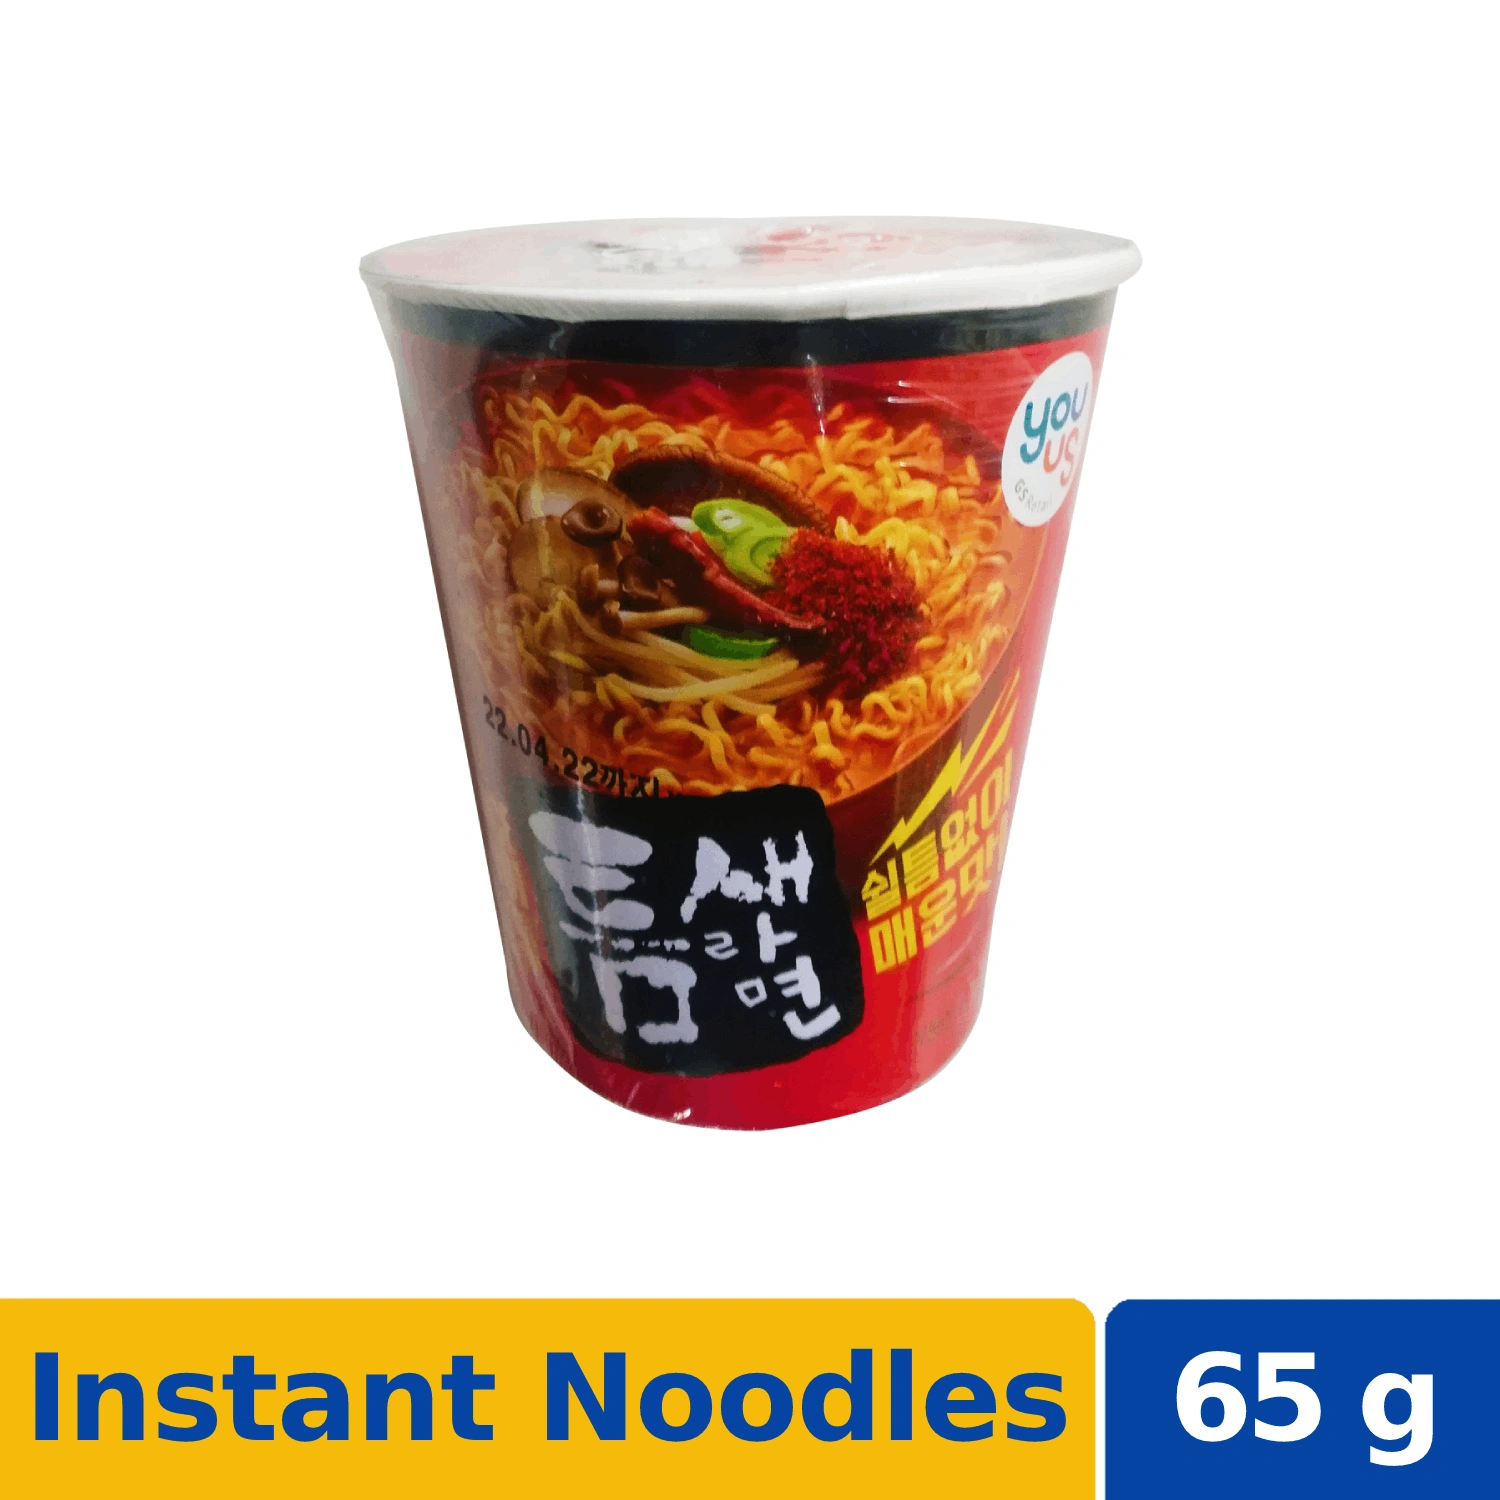 Youus Spicy & Hot Ramen Cup 65g - | NCCC Online Store